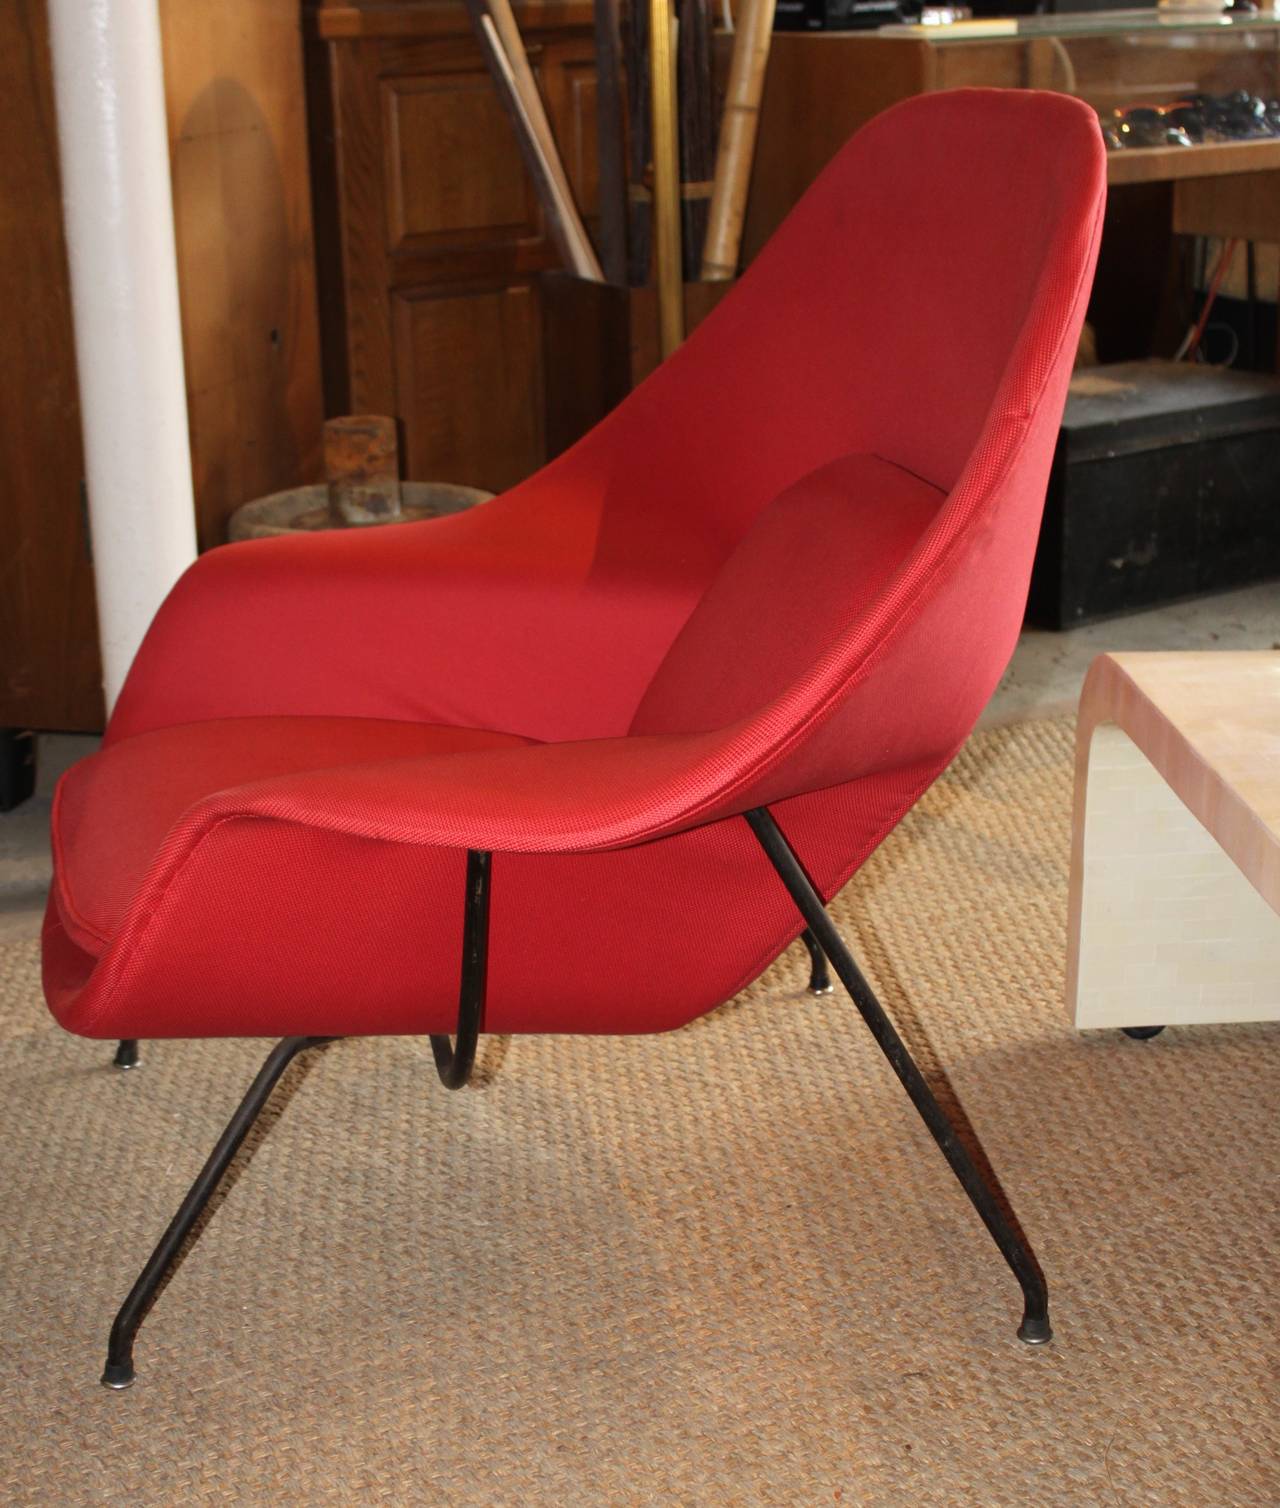 1950s, Saarinen Womb chair with iron legs.